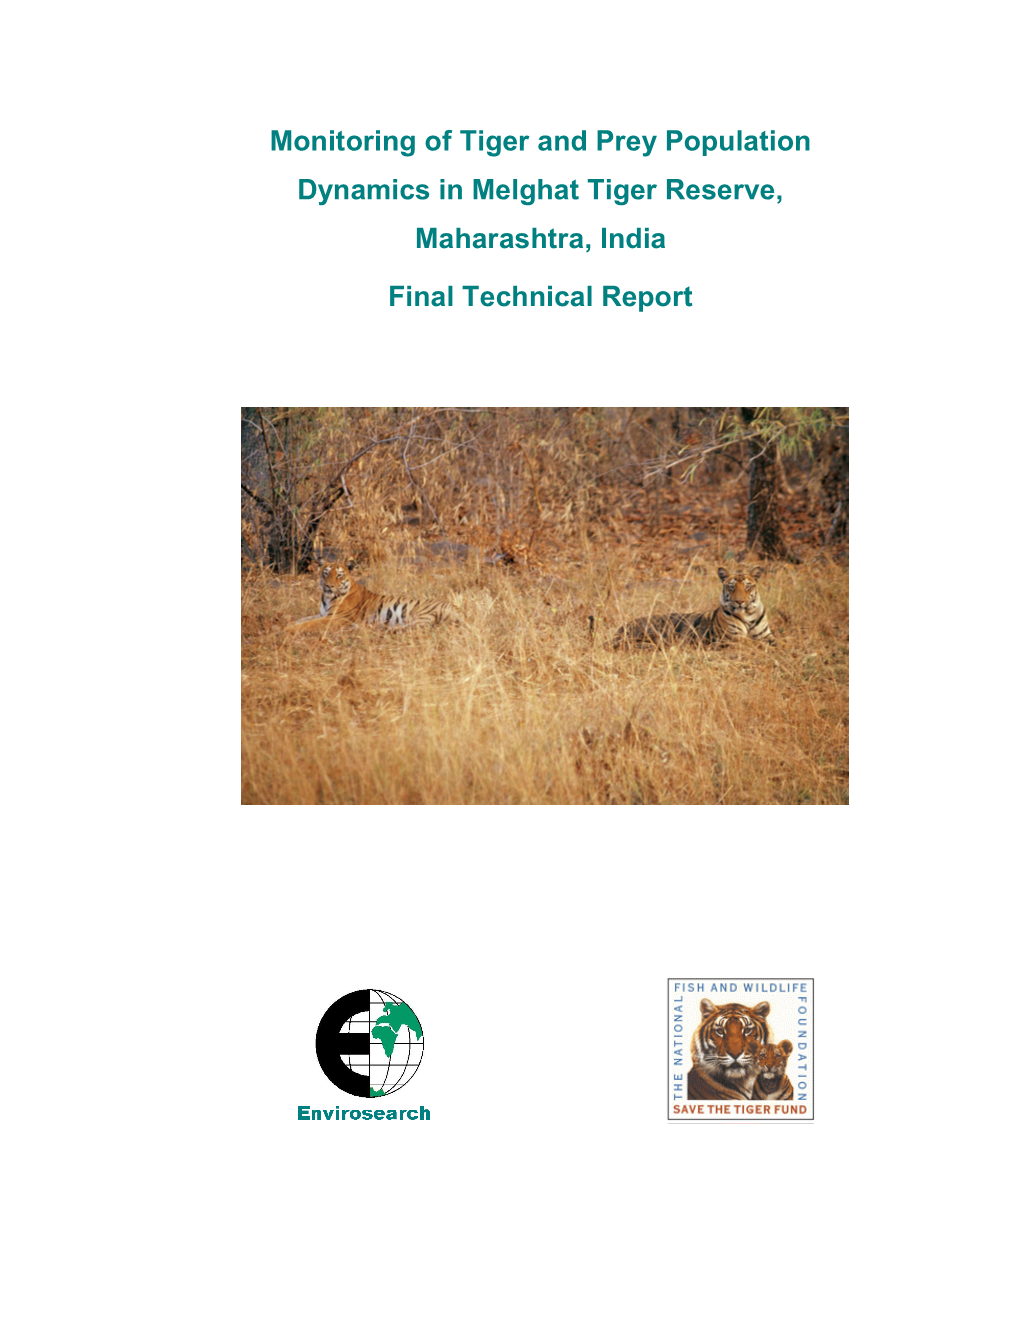 Monitoring of Tiger and Prey Population Dynamics in Melghat Tiger Reserve, Maharashtra, India